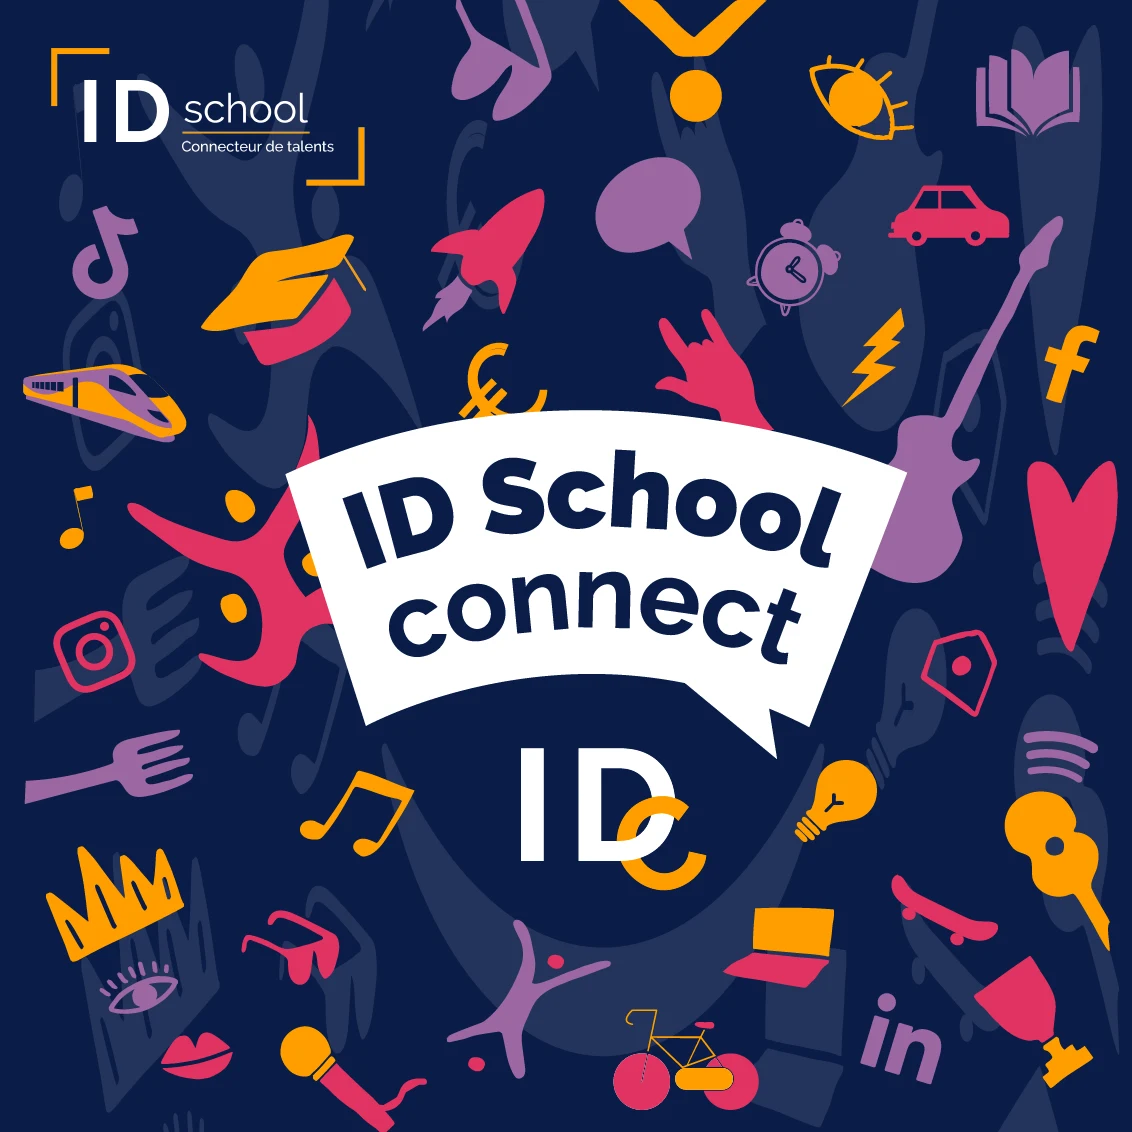 ID School connect le groupe communautaire facebook des alternants ID School